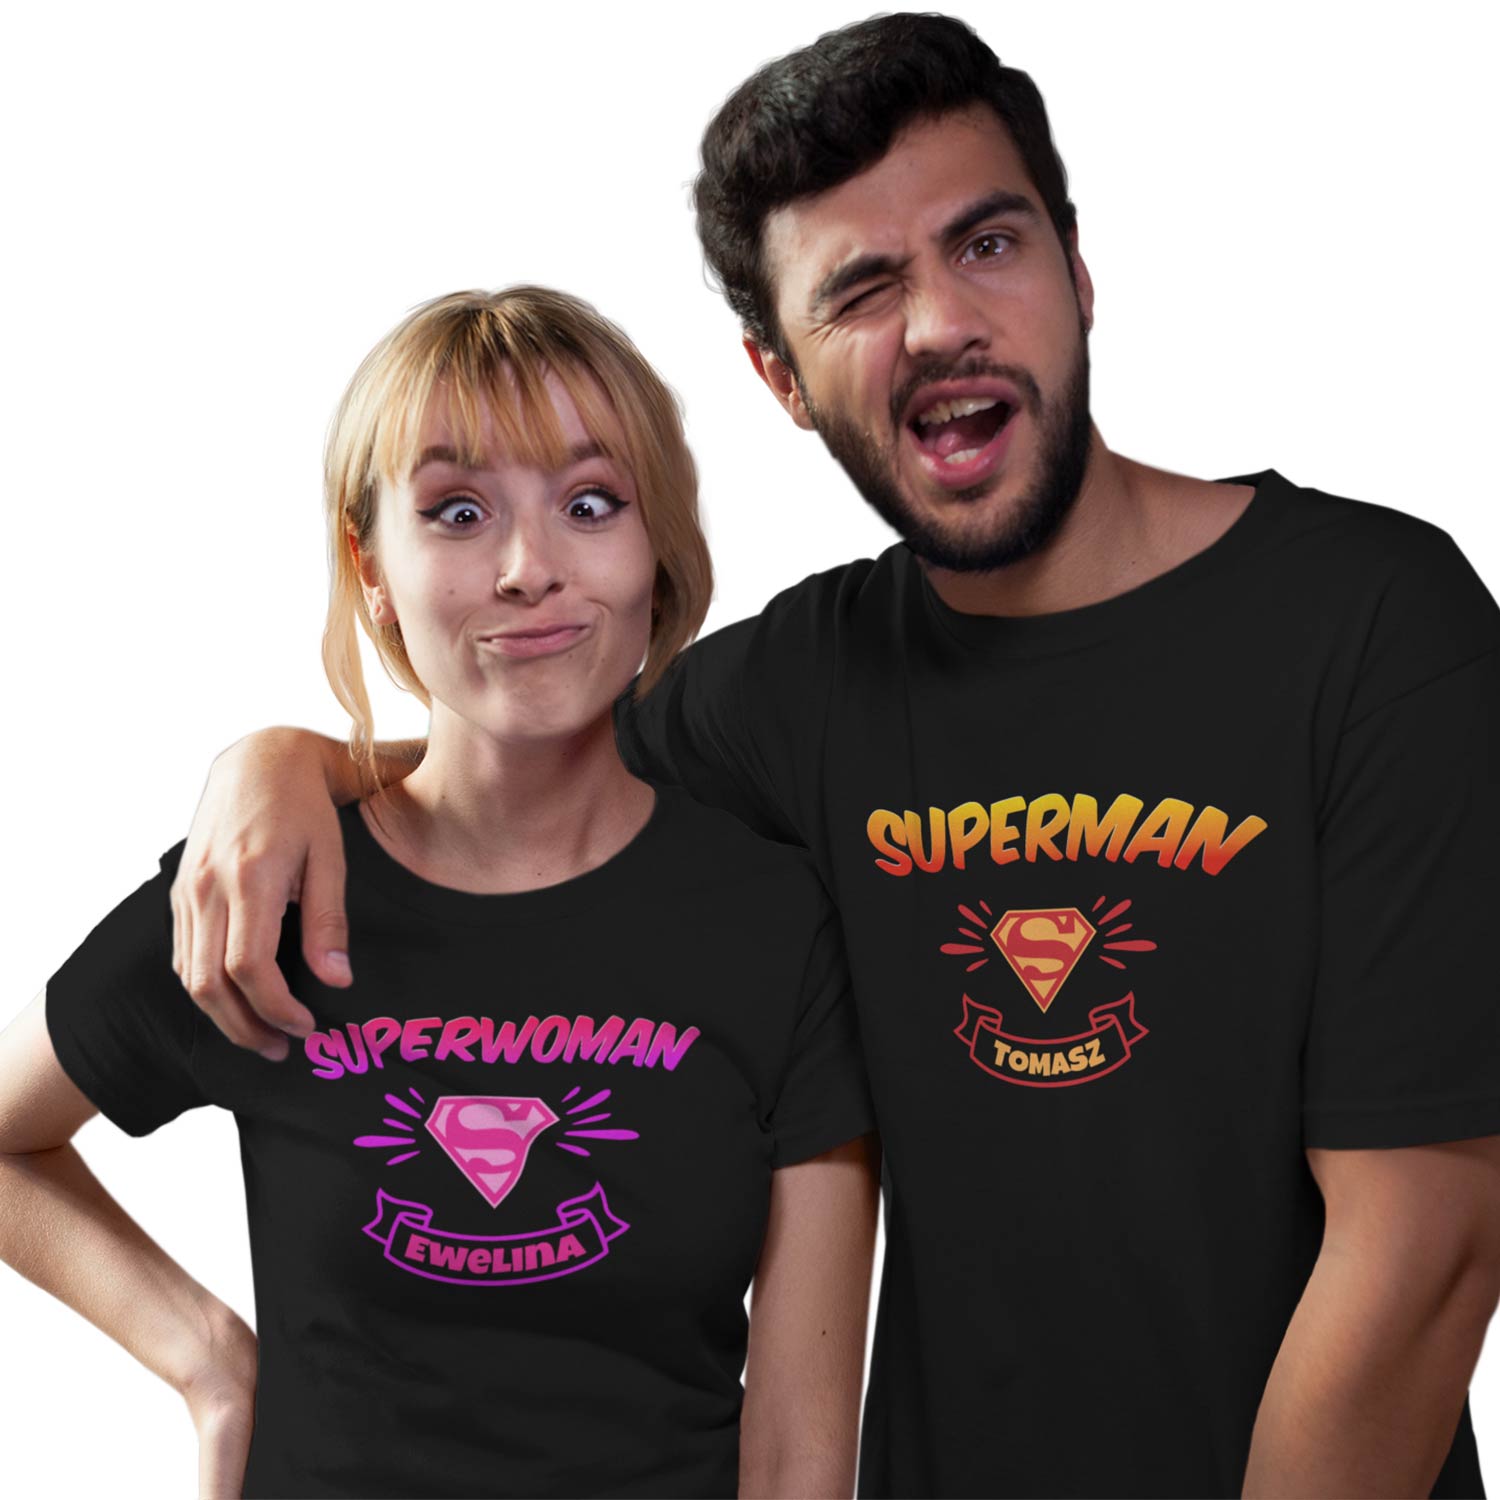 SUPERMAN, SUPERWOMAN - Zestaw koszulek dla par Walentynki